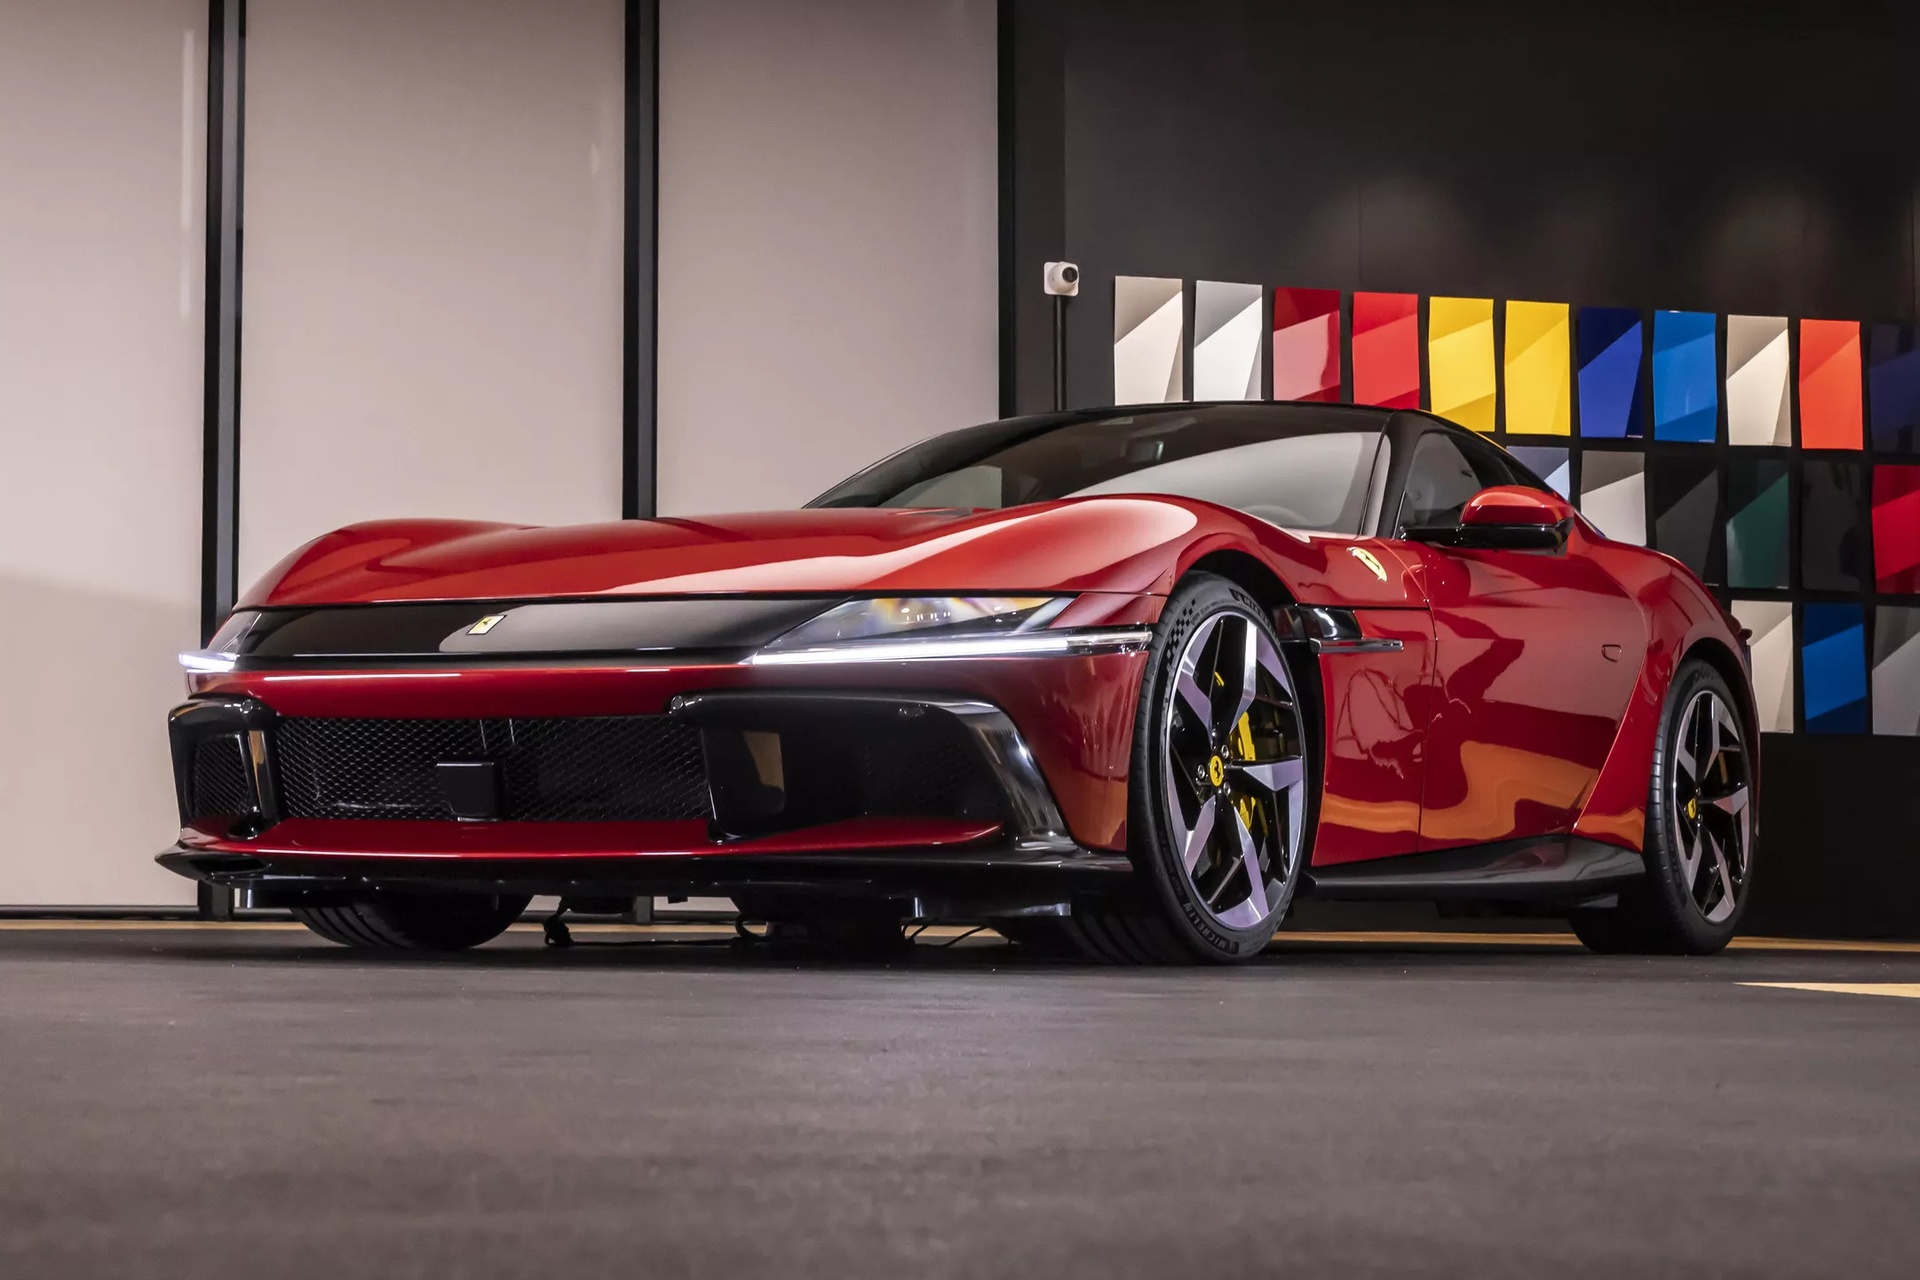 Chi tiết Ferrari 12Cilindri - siêu xe thay thế cho 812 Superfast